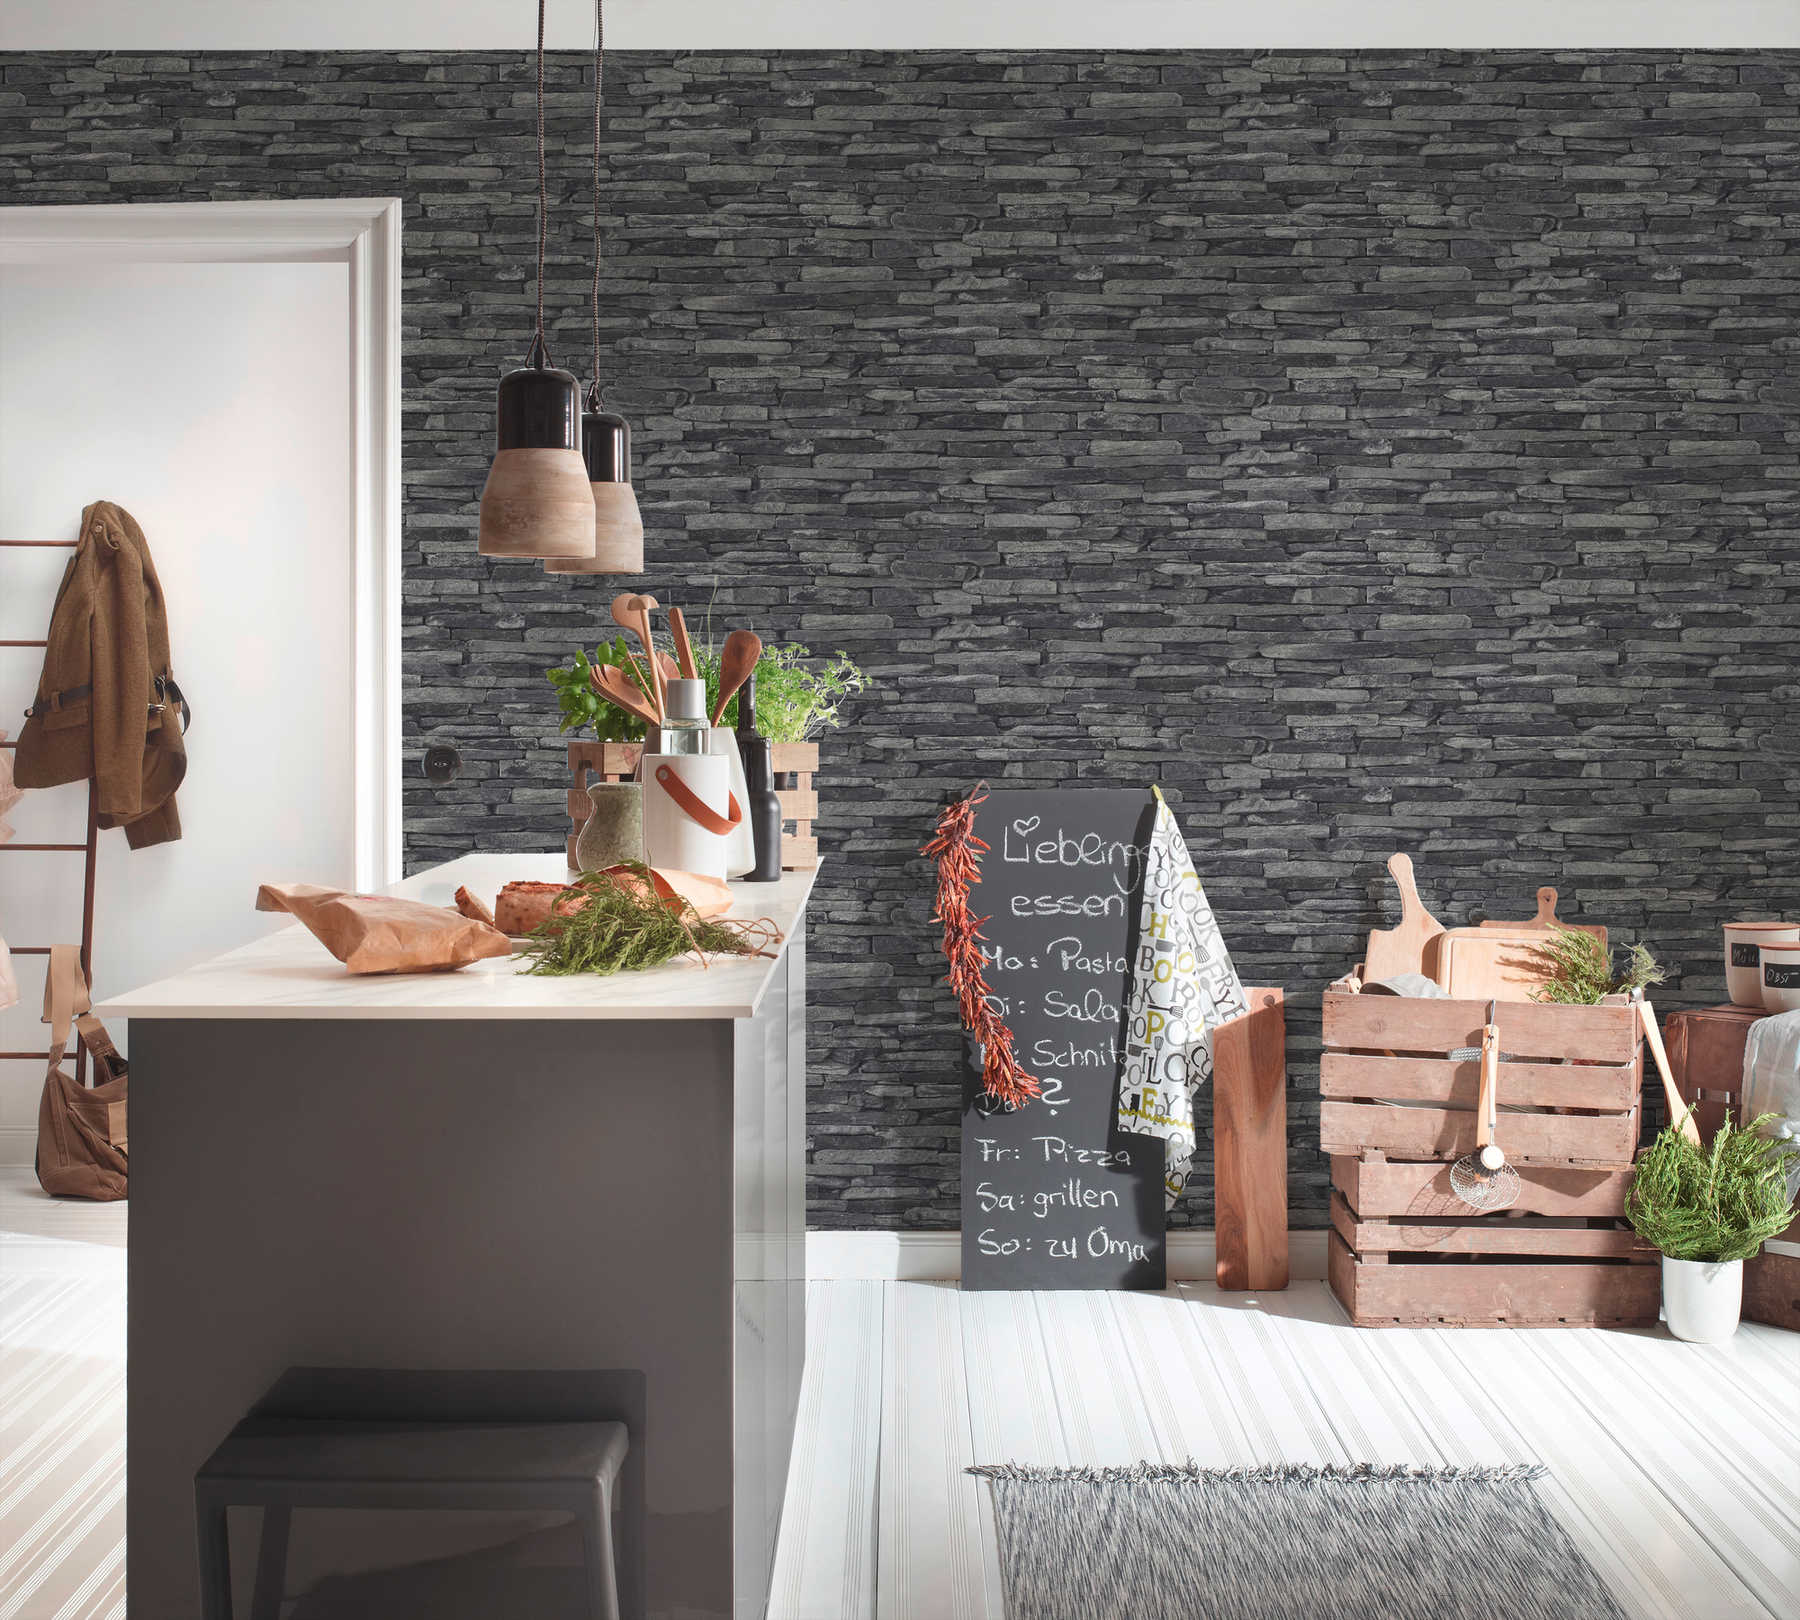             Wallpaper with stone look, dark natural stones & 3D effect - grey, black
        